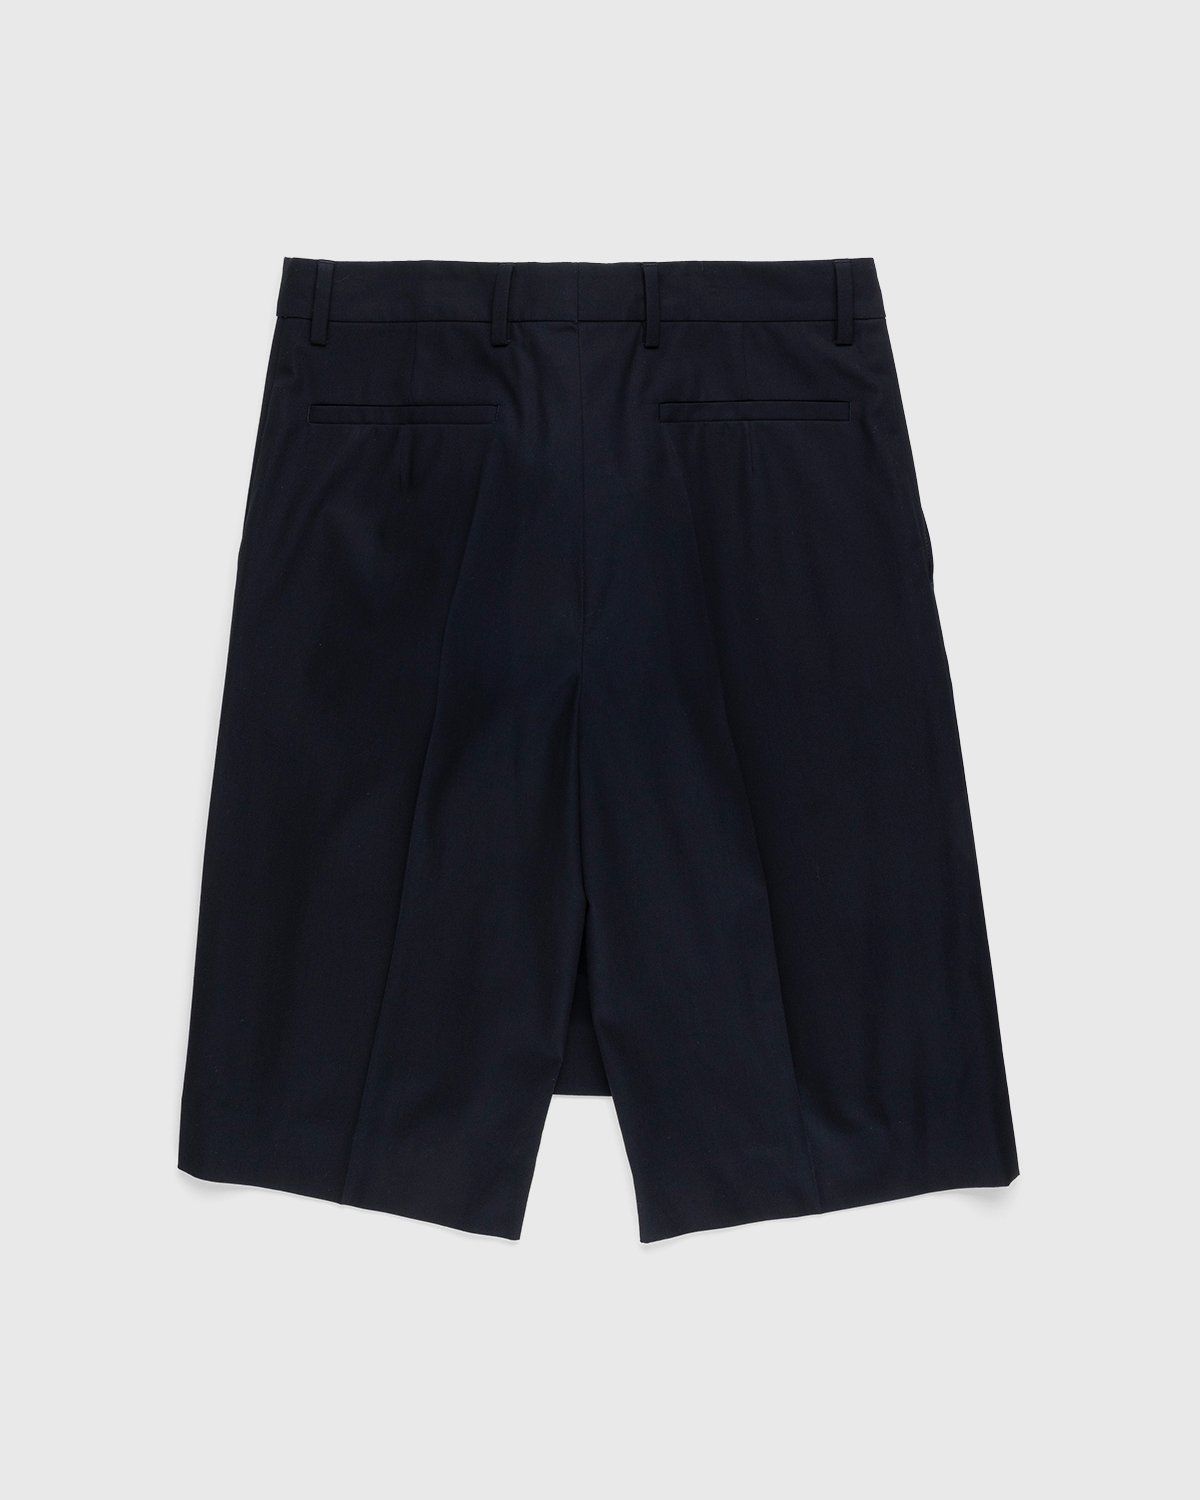 Dries van Noten – Parwin Shorts Navy - Shorts - Blue - Image 2